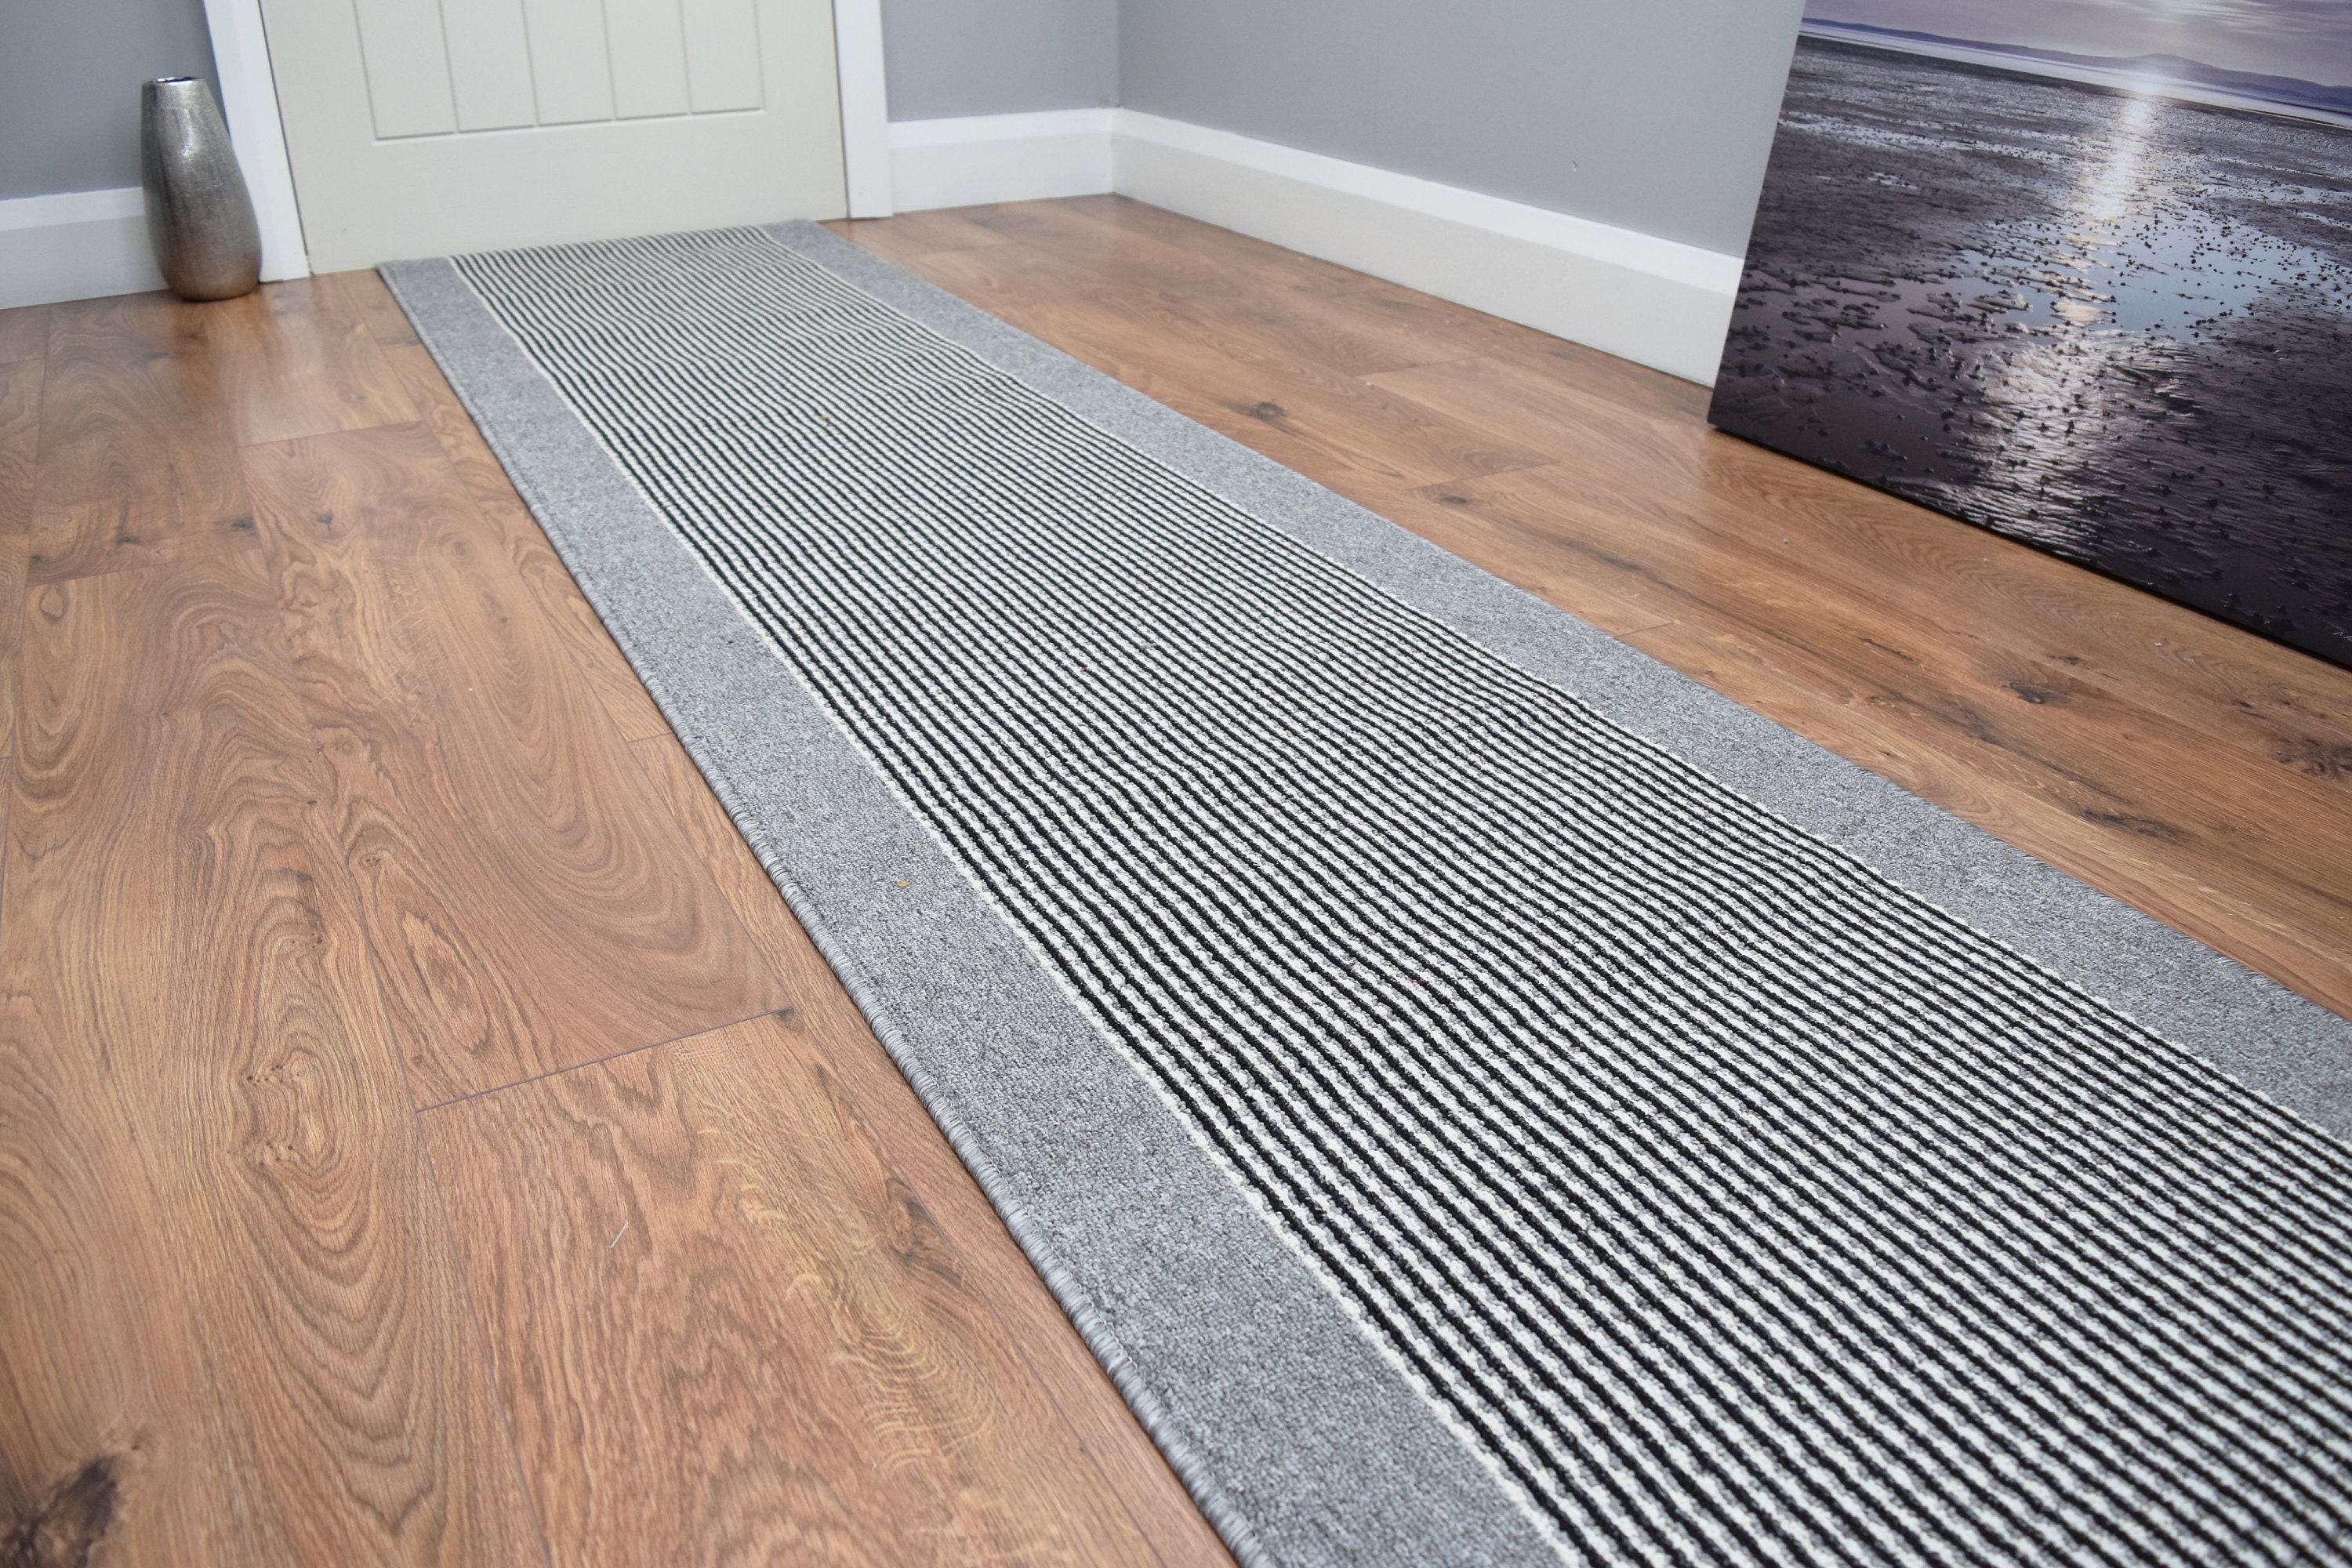 Flow.month Aurrako Non Slip Rug Pads for Hardwood Floors,2x10 Feet Rug Pad for Carpeted Tile Floors with Area Rugs,Runner Anti Slip Skid(Open Wave)